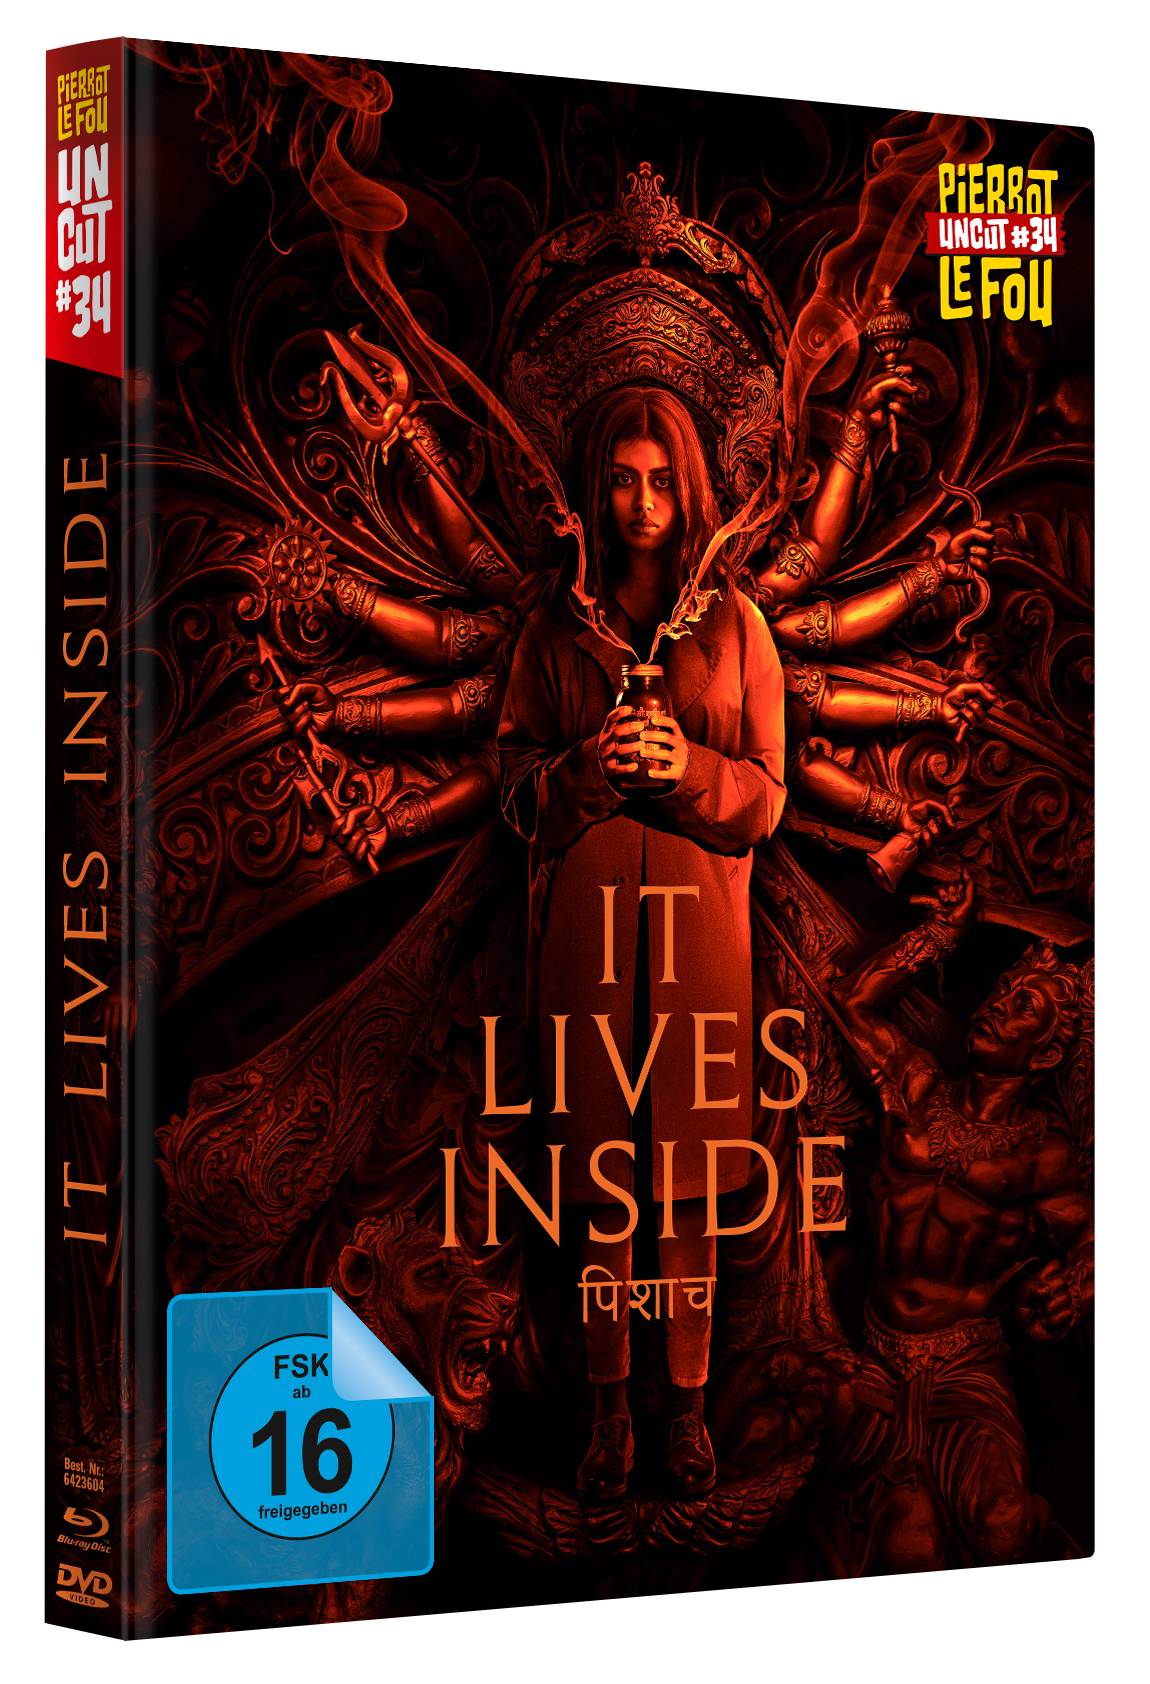 It Lives Inside - signierte Limited Edition Mediabook (uncut) (Blu-ray + DVD)